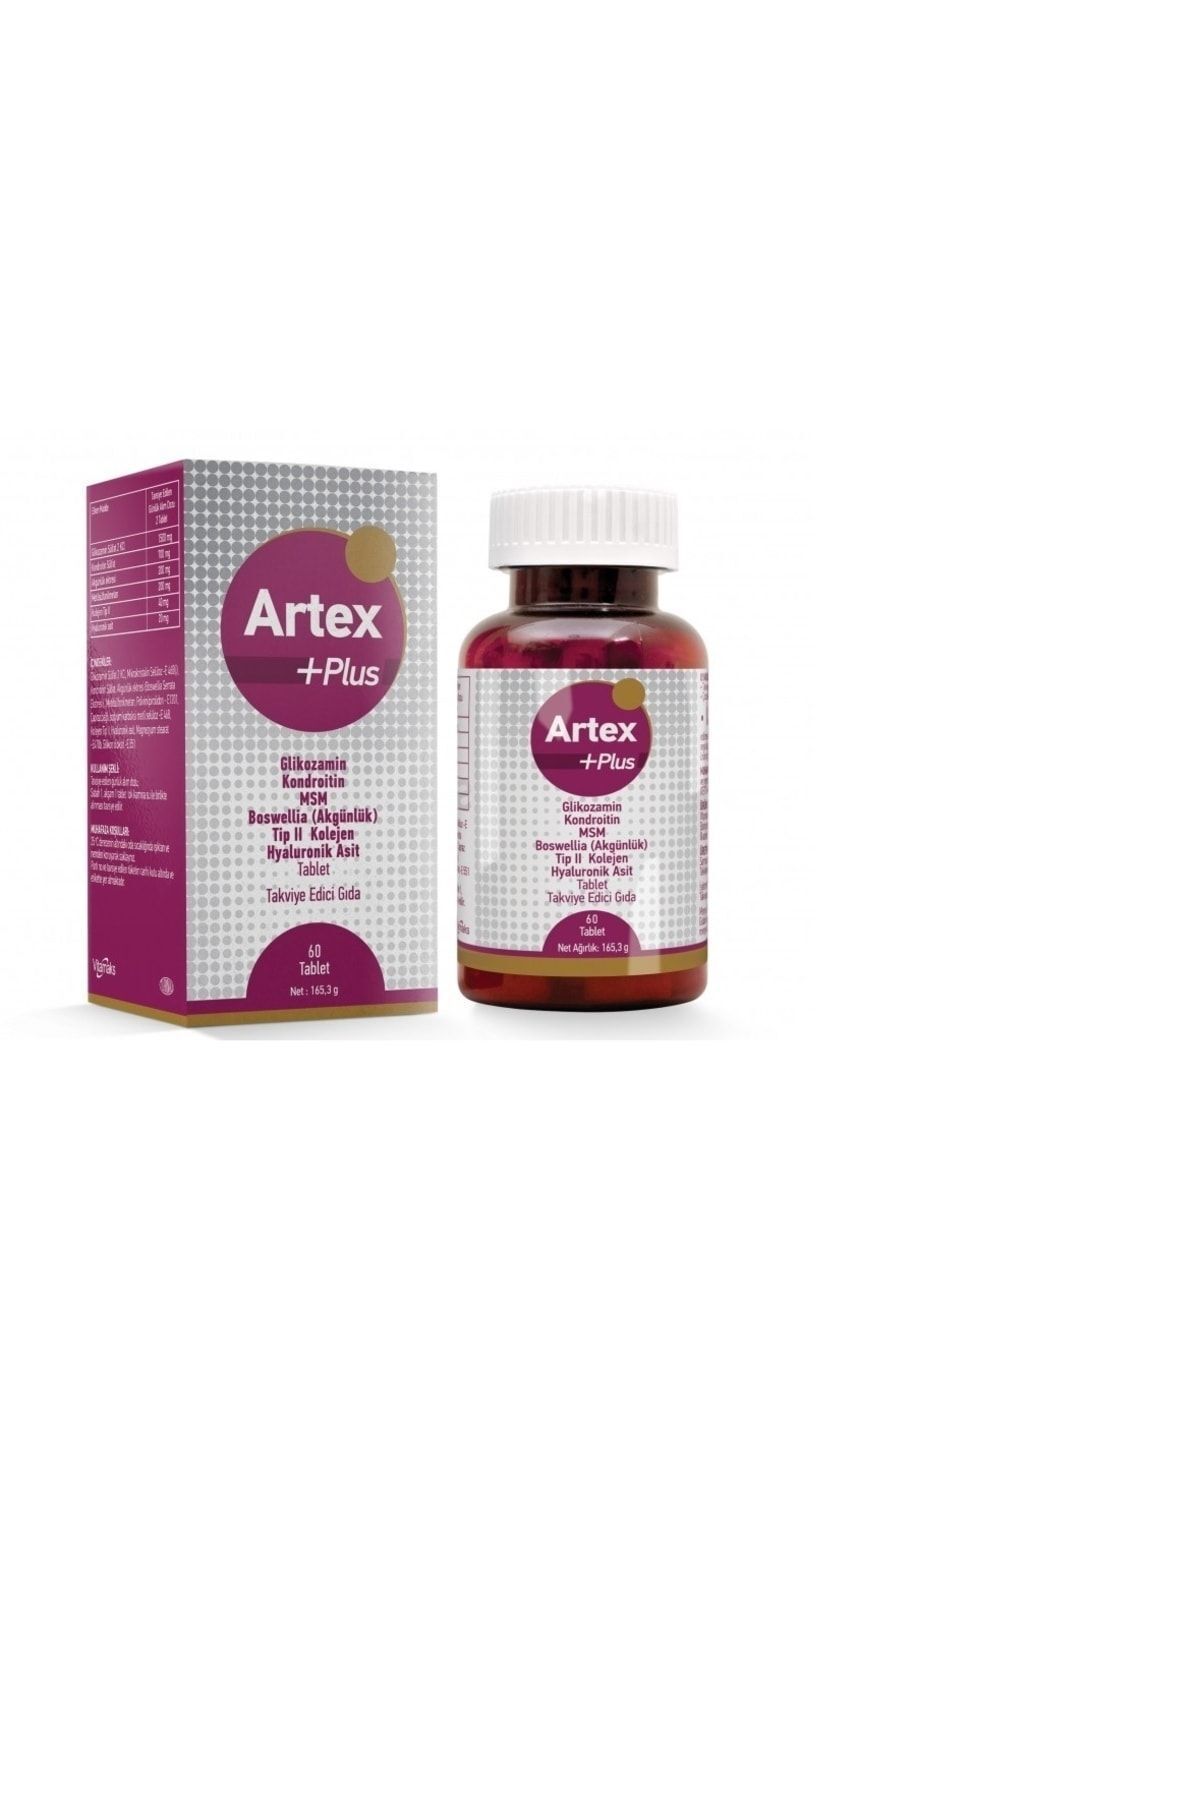 Artex Plus 60 Tablet Glikozamin-kondroitin-msm-tip 2 Kolajen-hyaluronik Asit